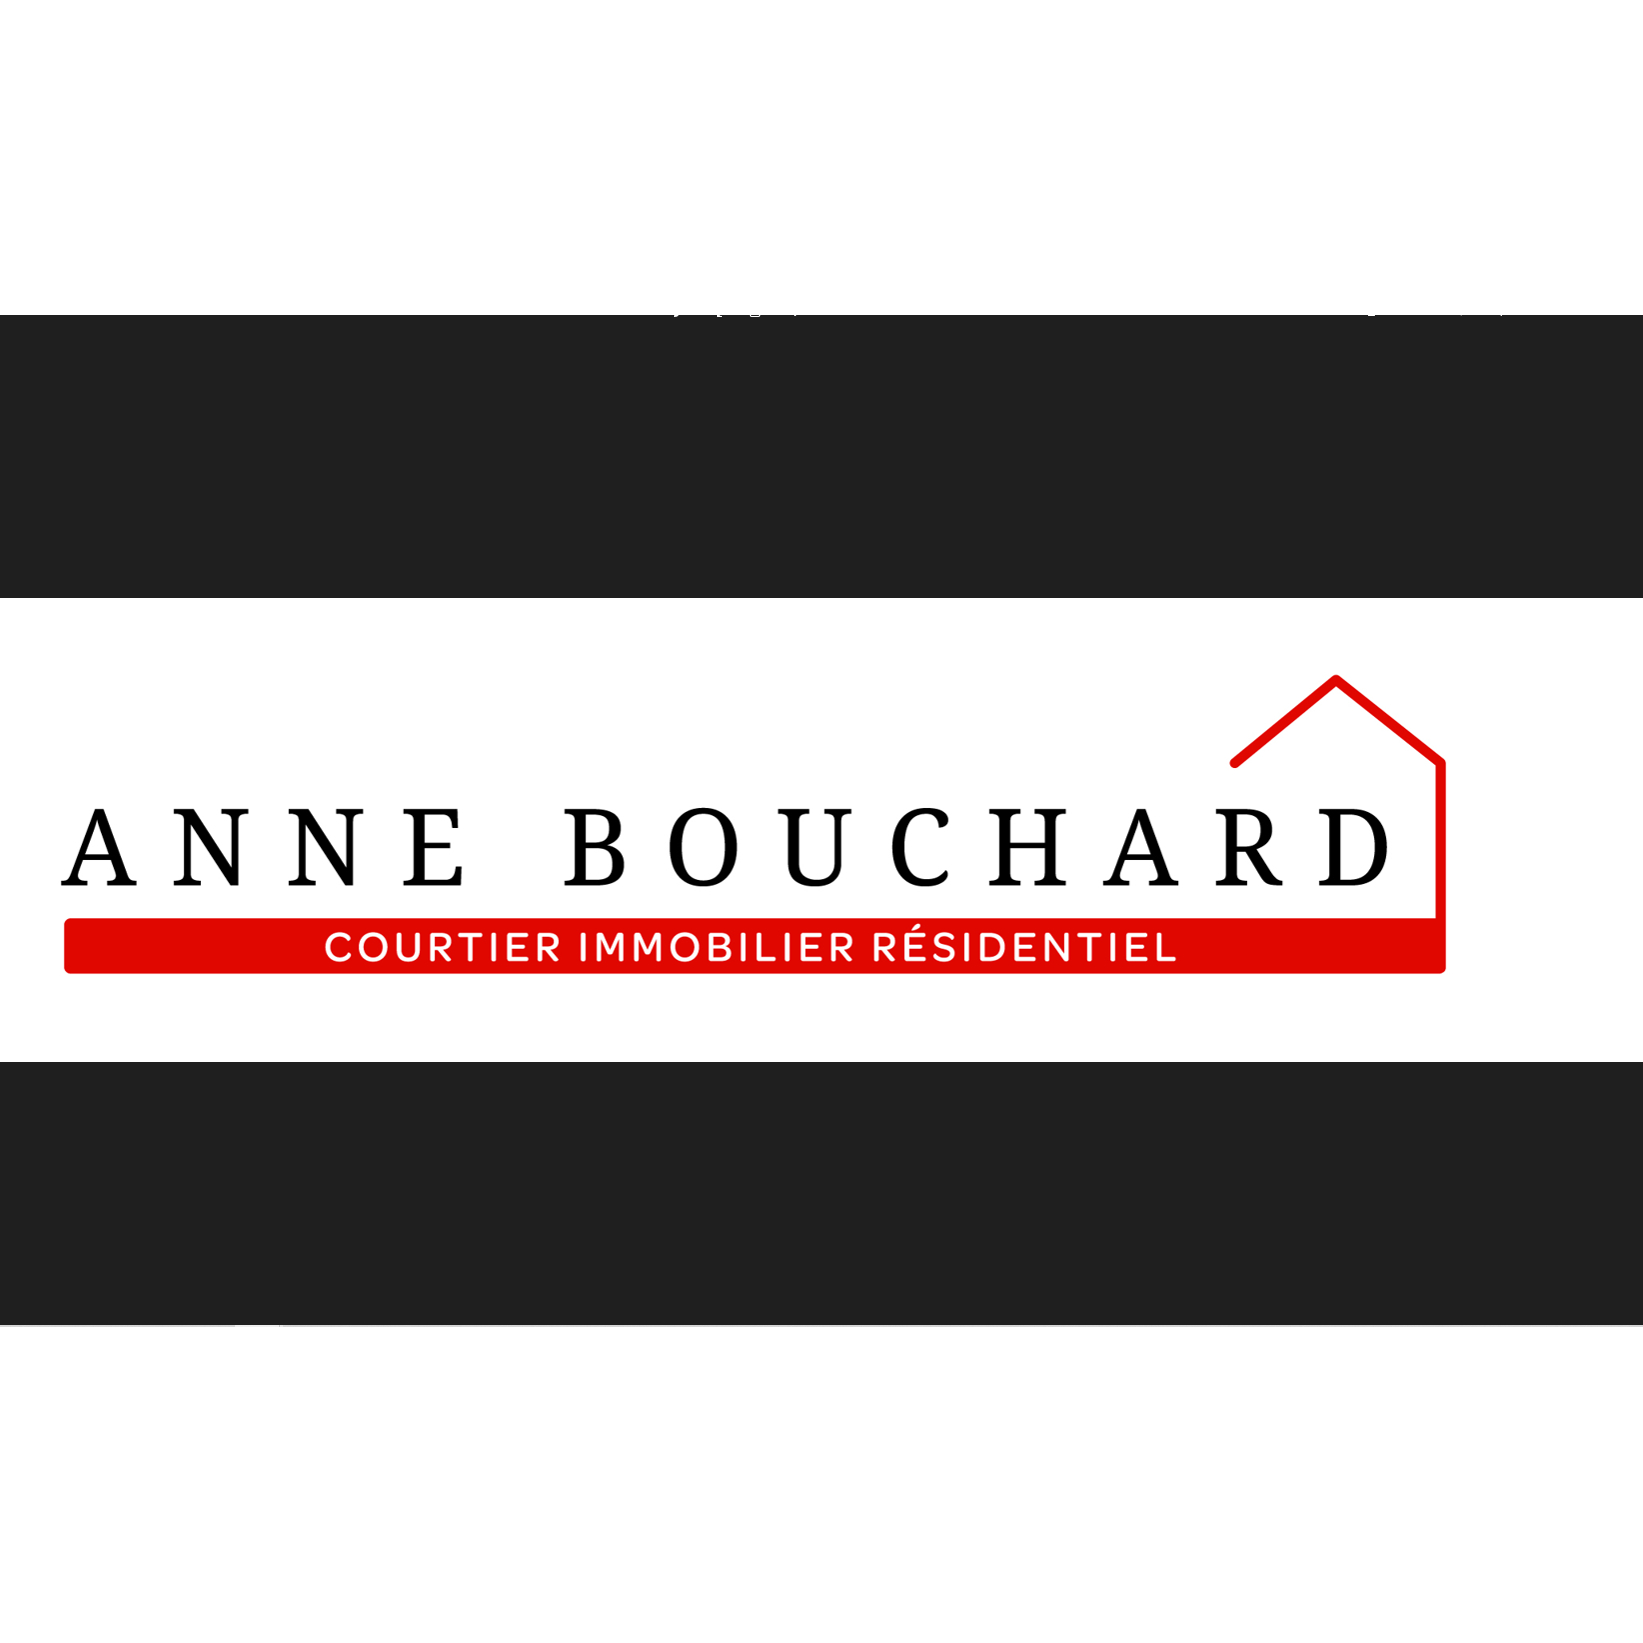 Anne Bouchard Courtier Immobilier Résidentiel - Real Estate Agents & Brokers